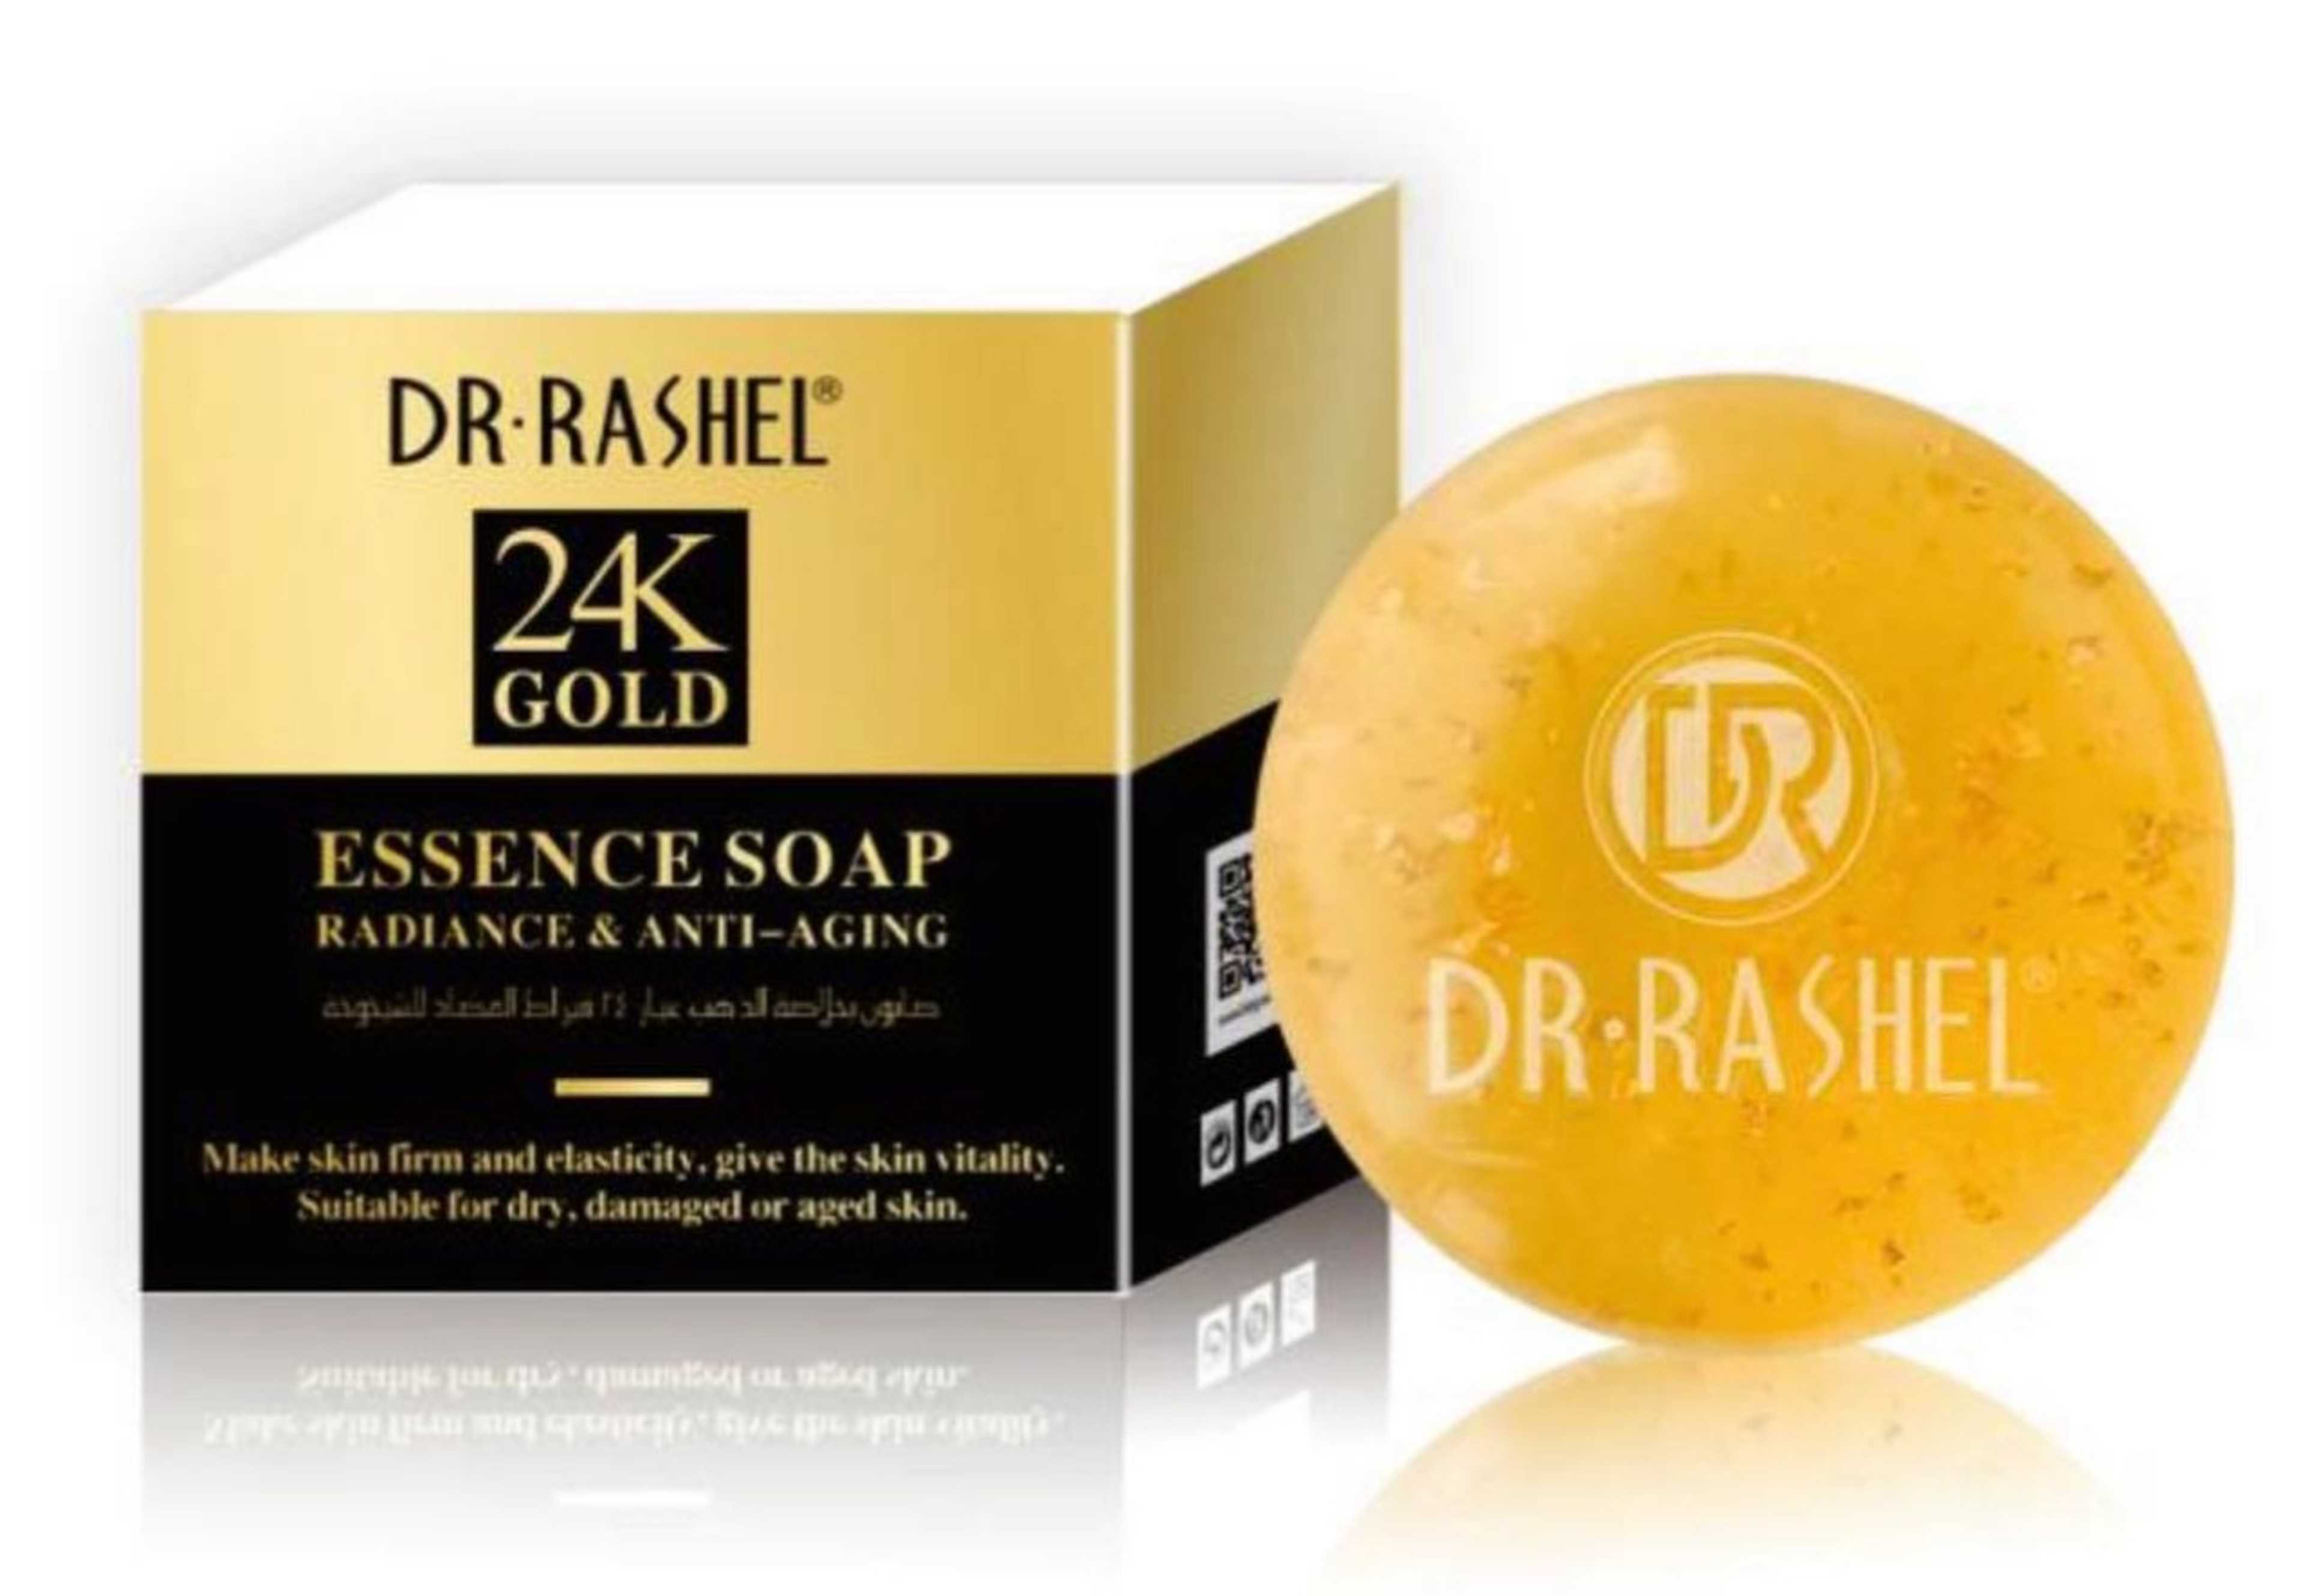 Dr Rashel 24k Gold Essence Soap Radiance and Anti Aging